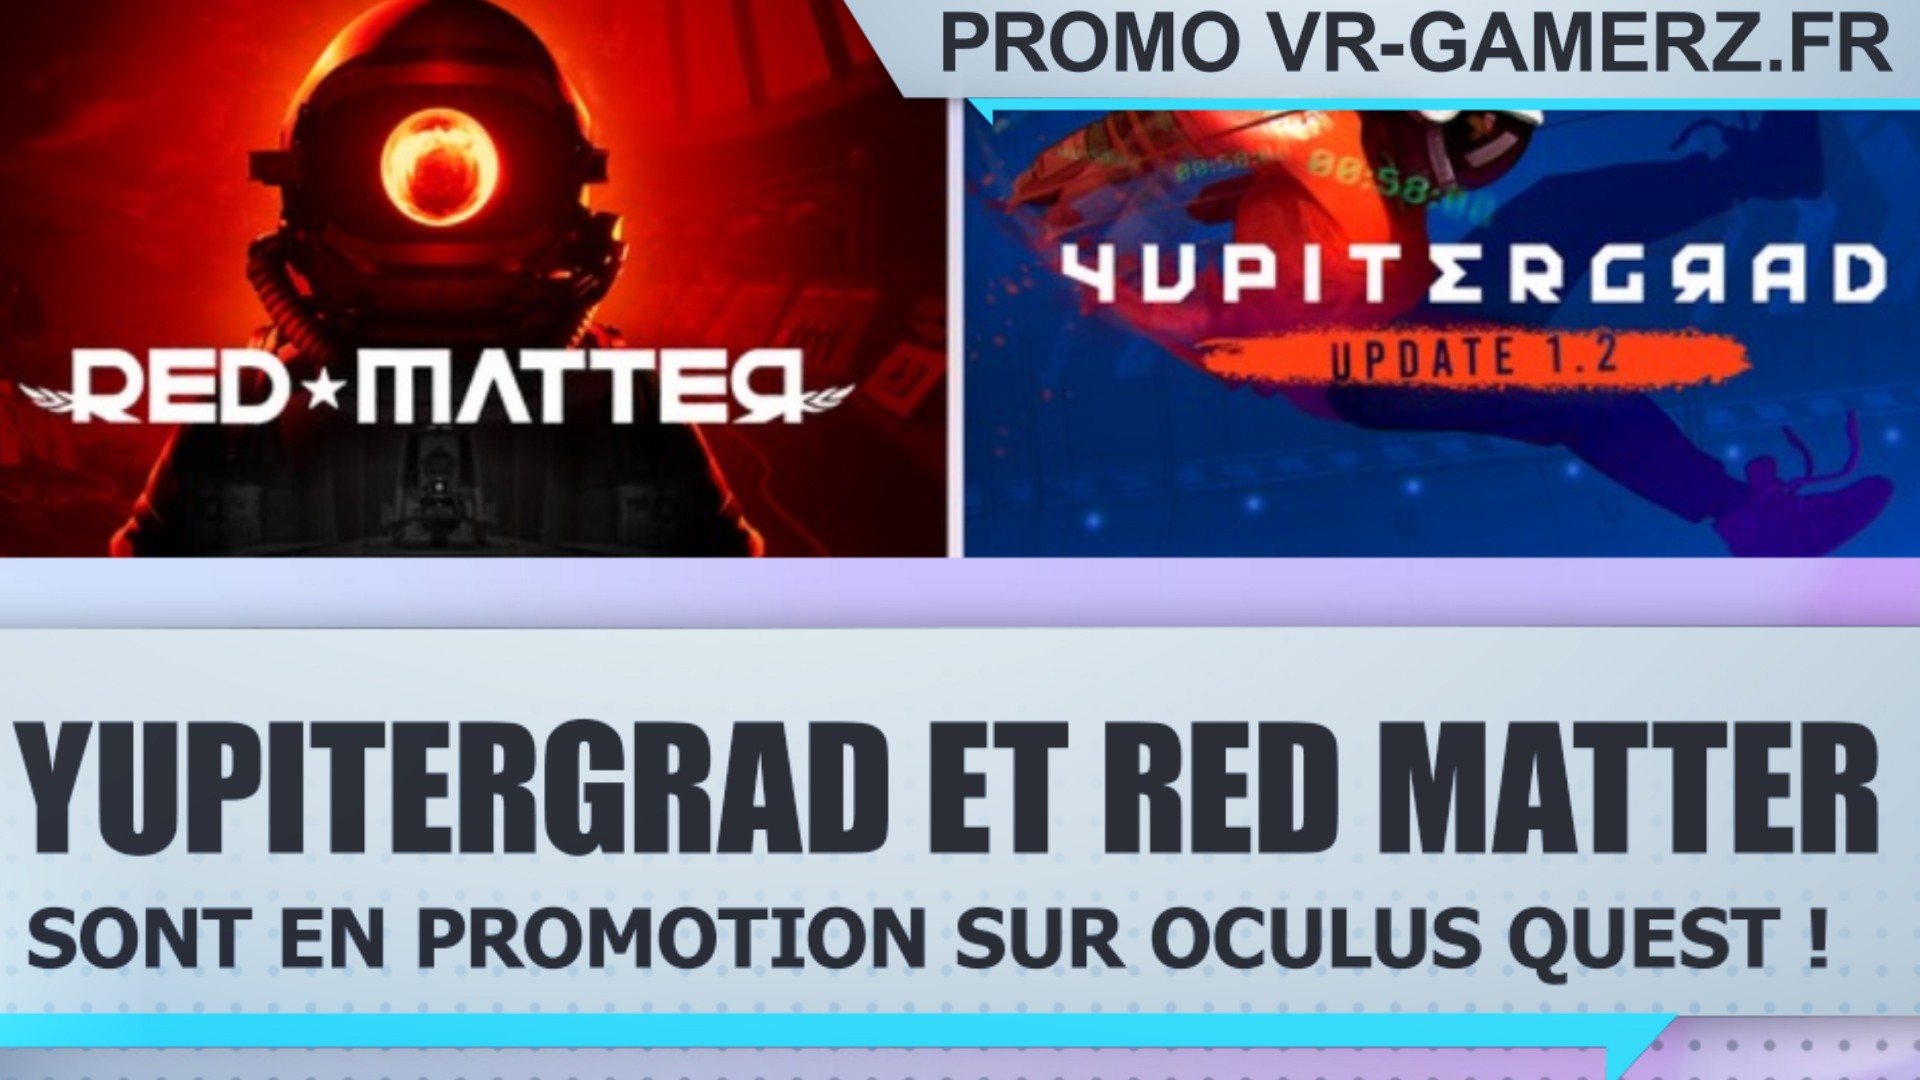 Yupitergrad et Red matter sont en promotion sur Oculus quest !